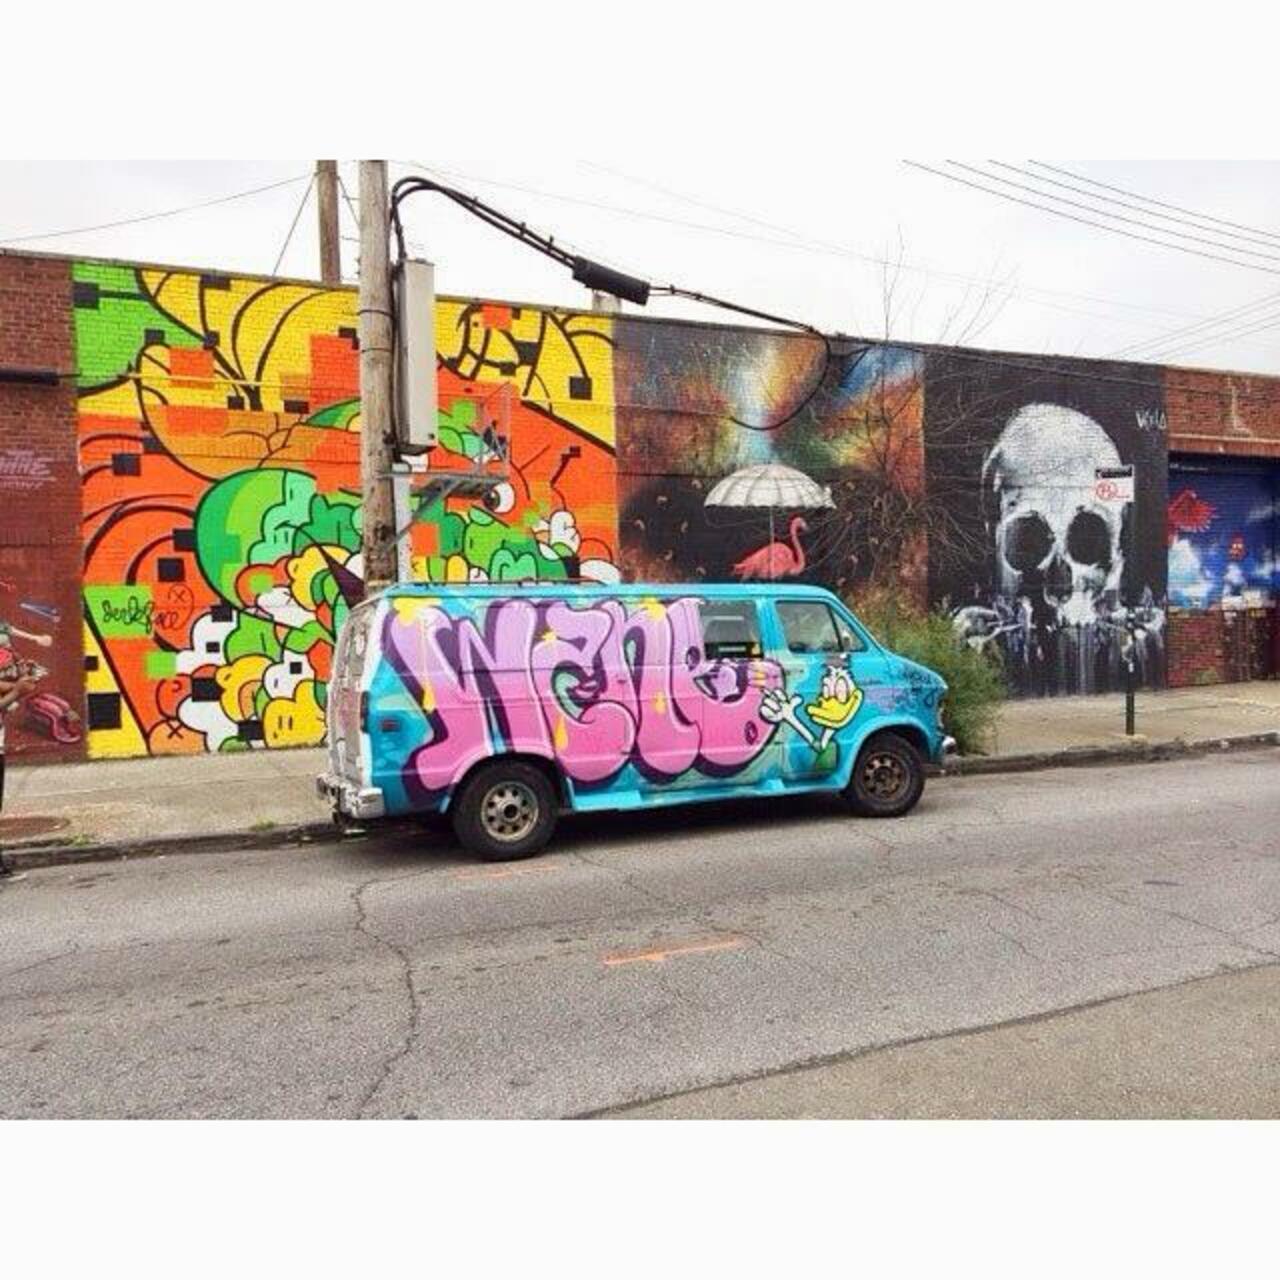 I saw this van in #brooklyn . Does anyone know of the #artist ? #streetart #graffiti http://t.co/k47USUEQ3j